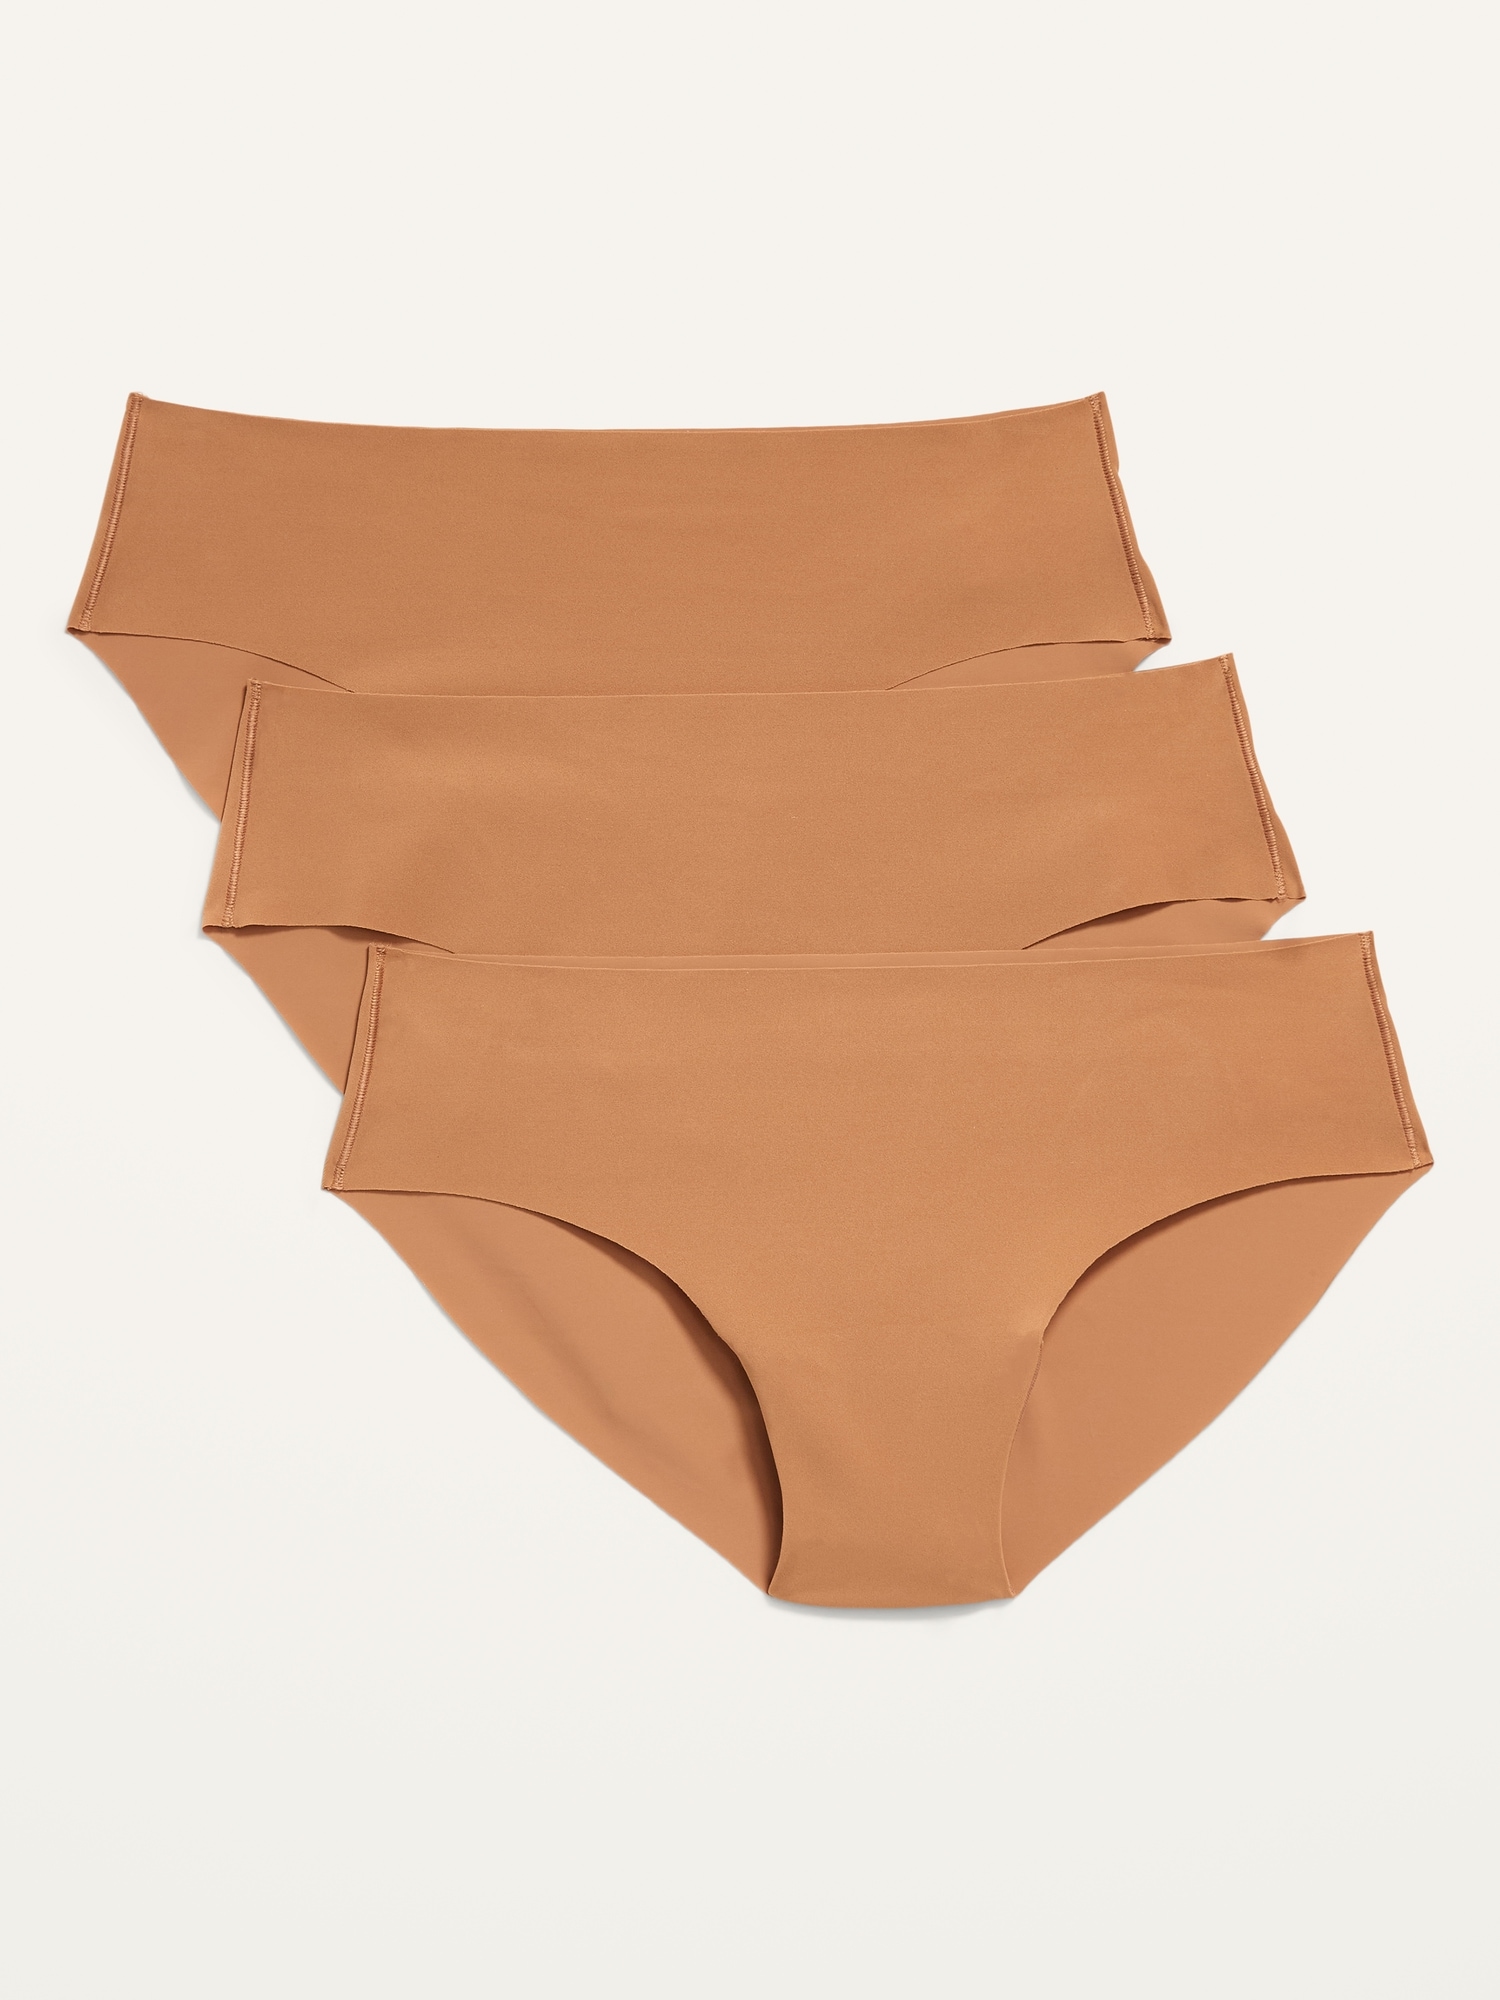 Buy COMFFY FIT Women's Seamless Underwear Ice Silk, Cotton-Nylon